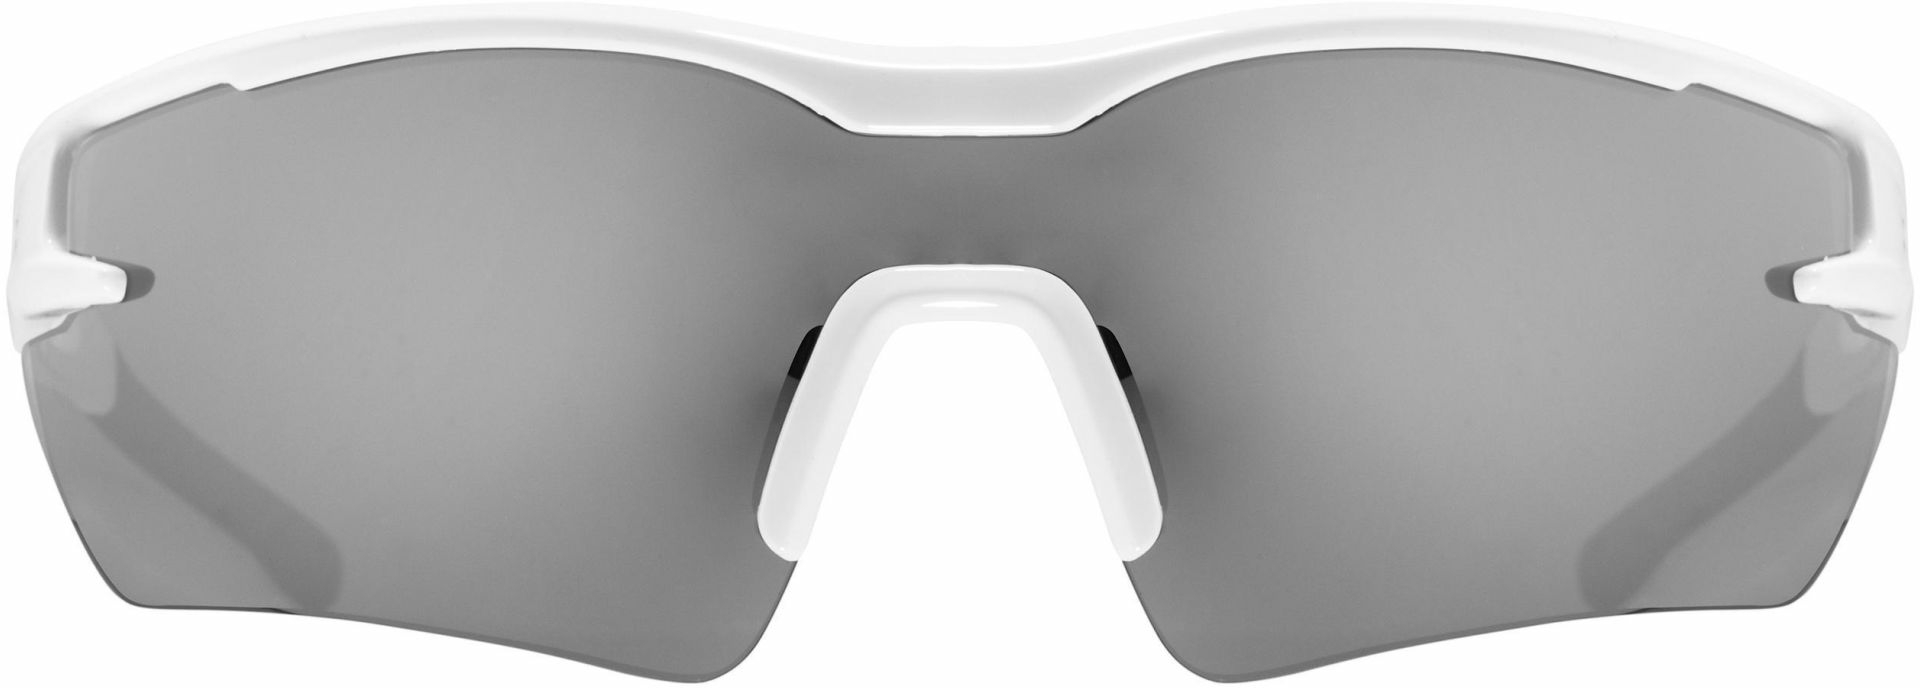 Uvex Sportbrille sportstyle 116